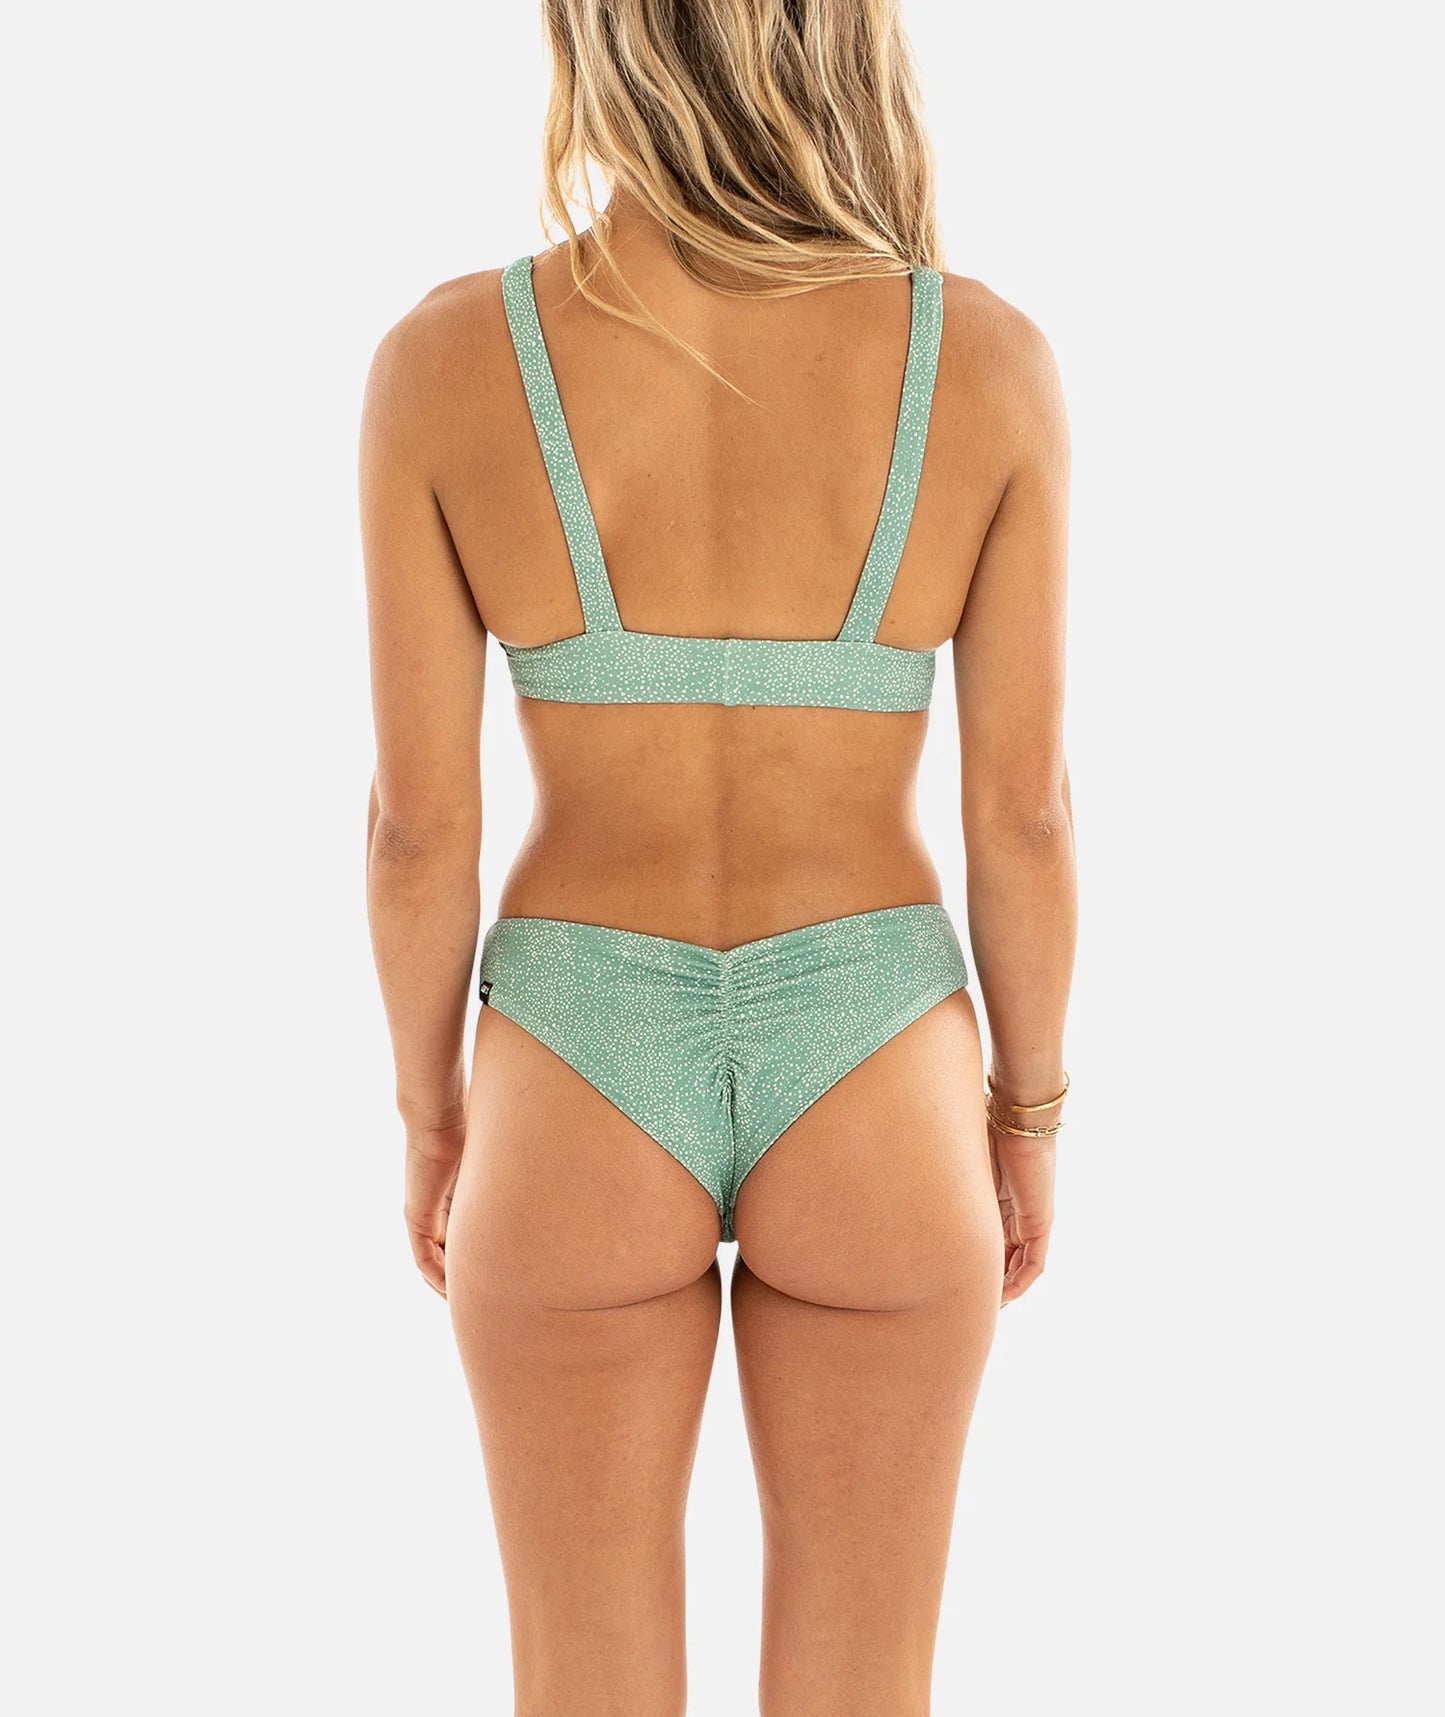 Jetty Claire Bikini Top - Green - Back View